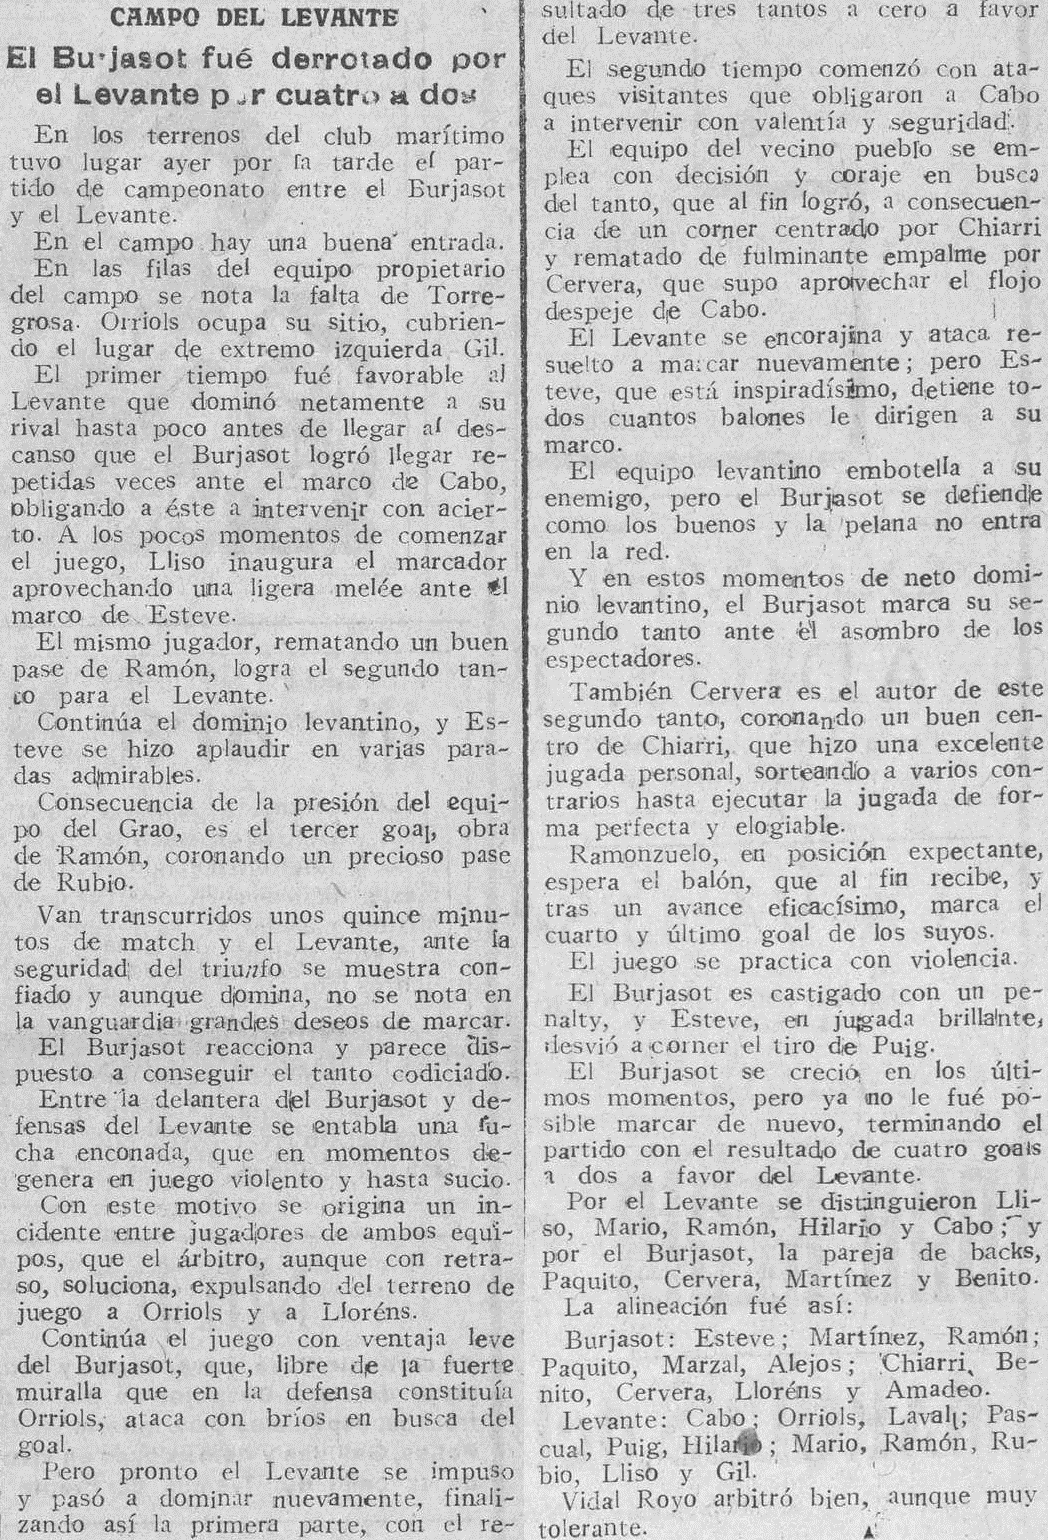 1927.12.21 (21 декабря 1927), Леванте - Буржасот, 4-2.png